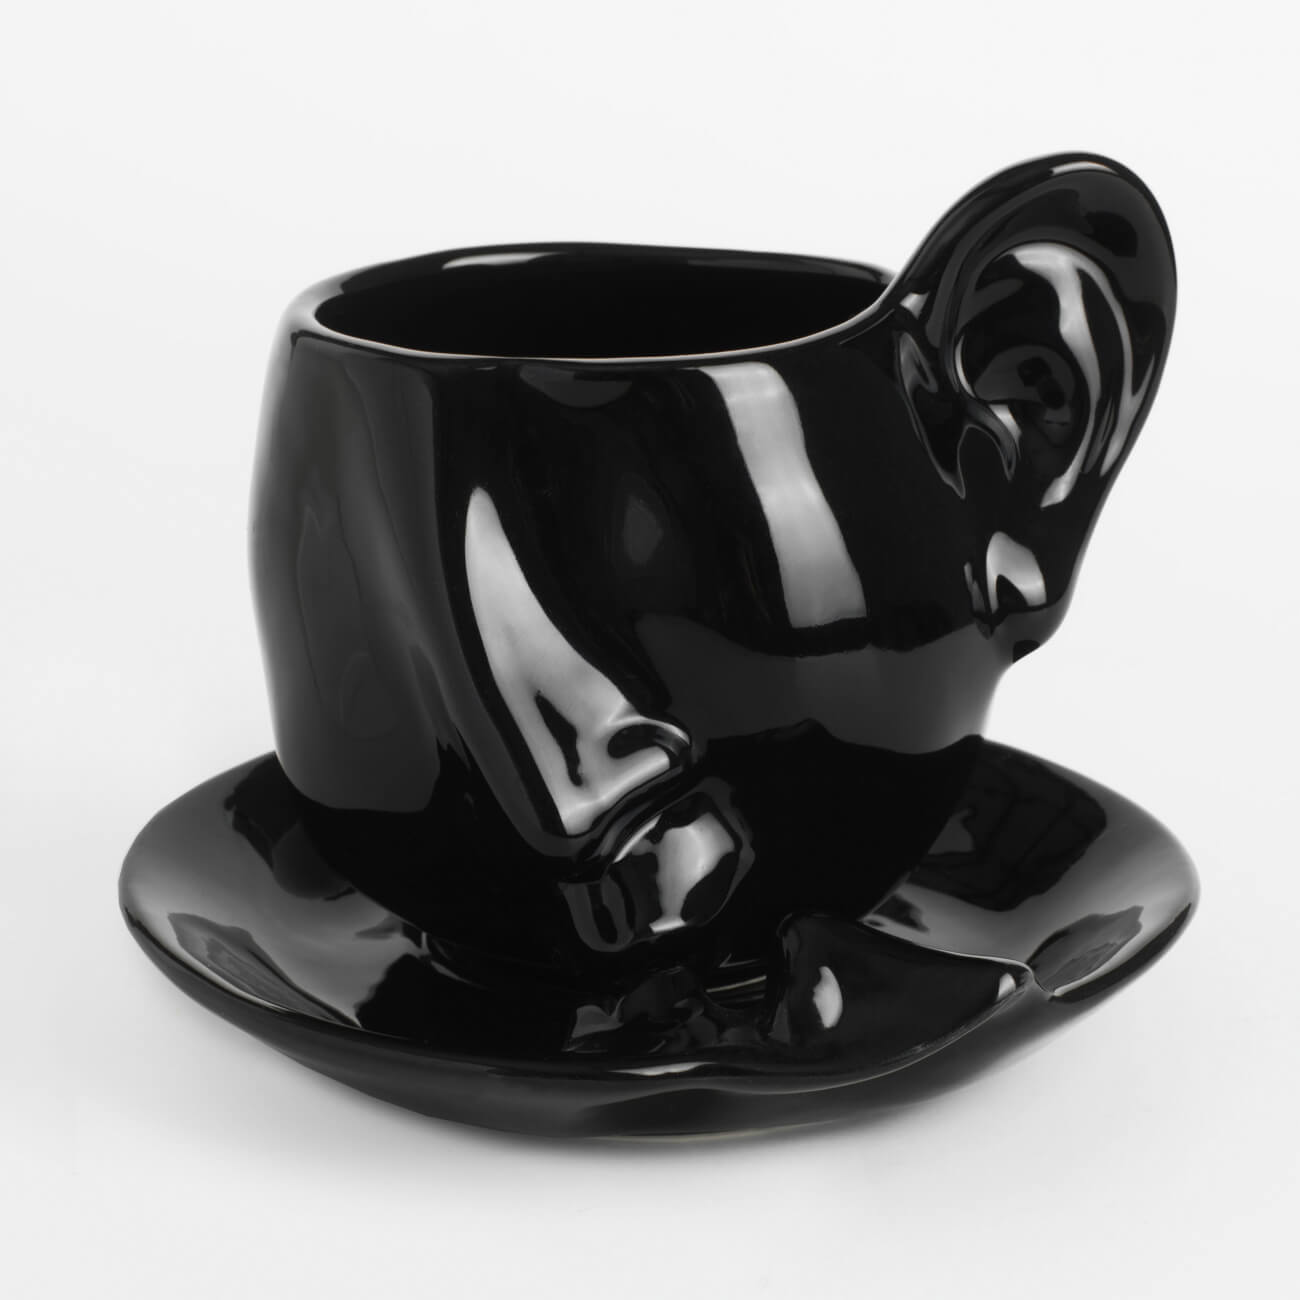 Пара чайная, 1 перс, 2 пр, 320 мл, керамика, черная, Поцелуй, Baise пара чайная чашка блюдце 350 мл tudor tu9999 4